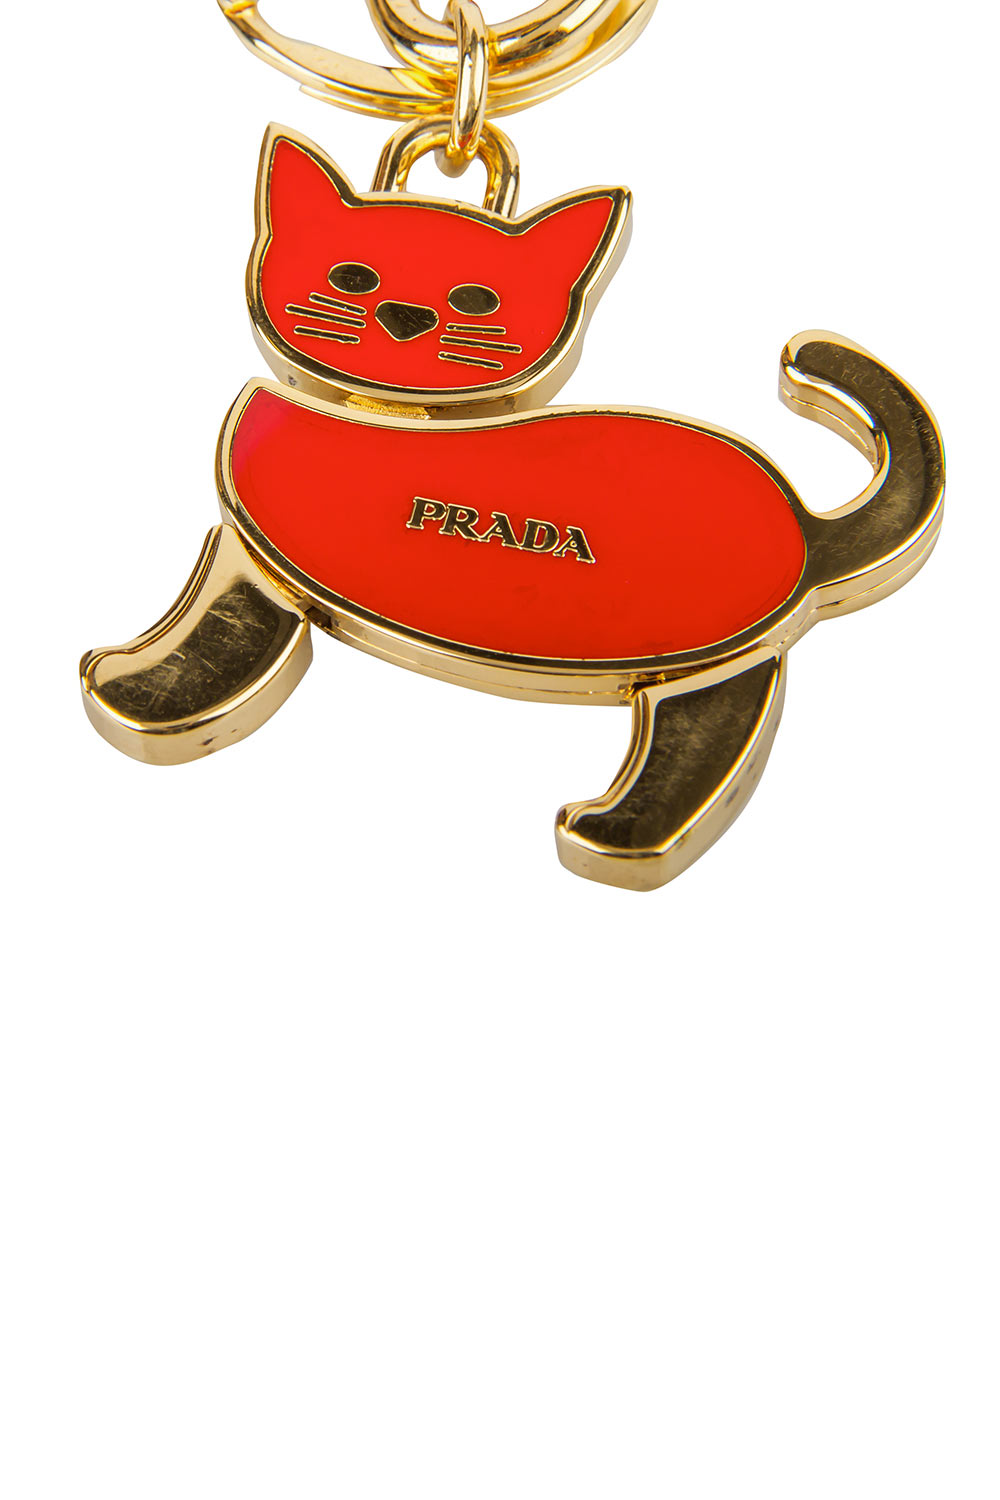 

Prada Red Enamel Gold Tone Cat Bag Charm / Key Ring